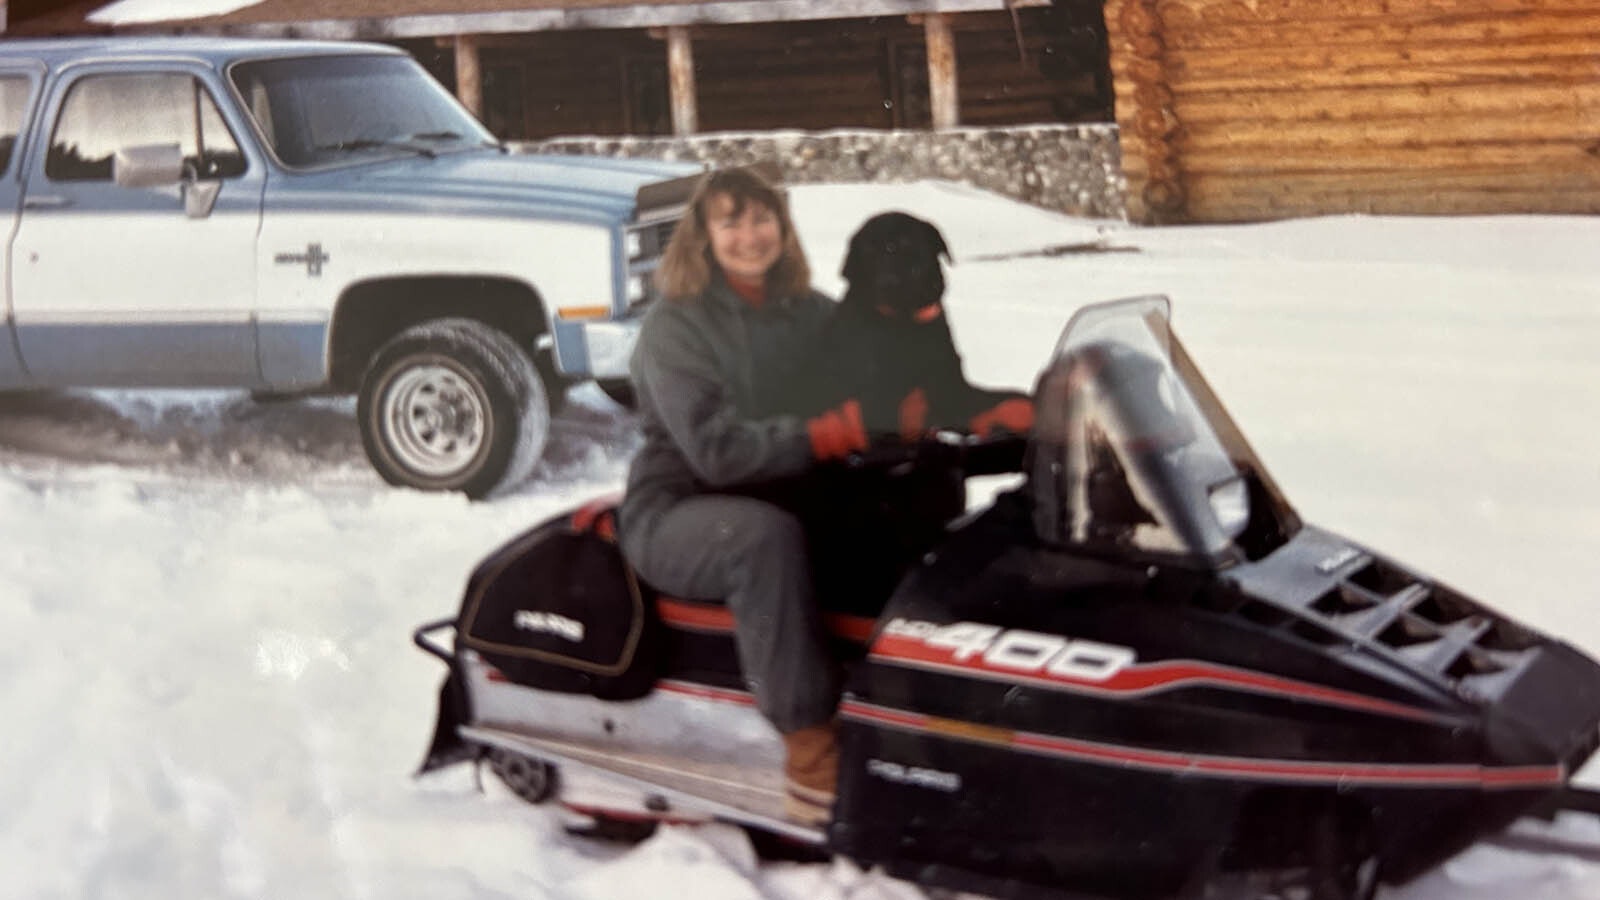 Barbara Carlsberg with her Labrador on a snowmobile.